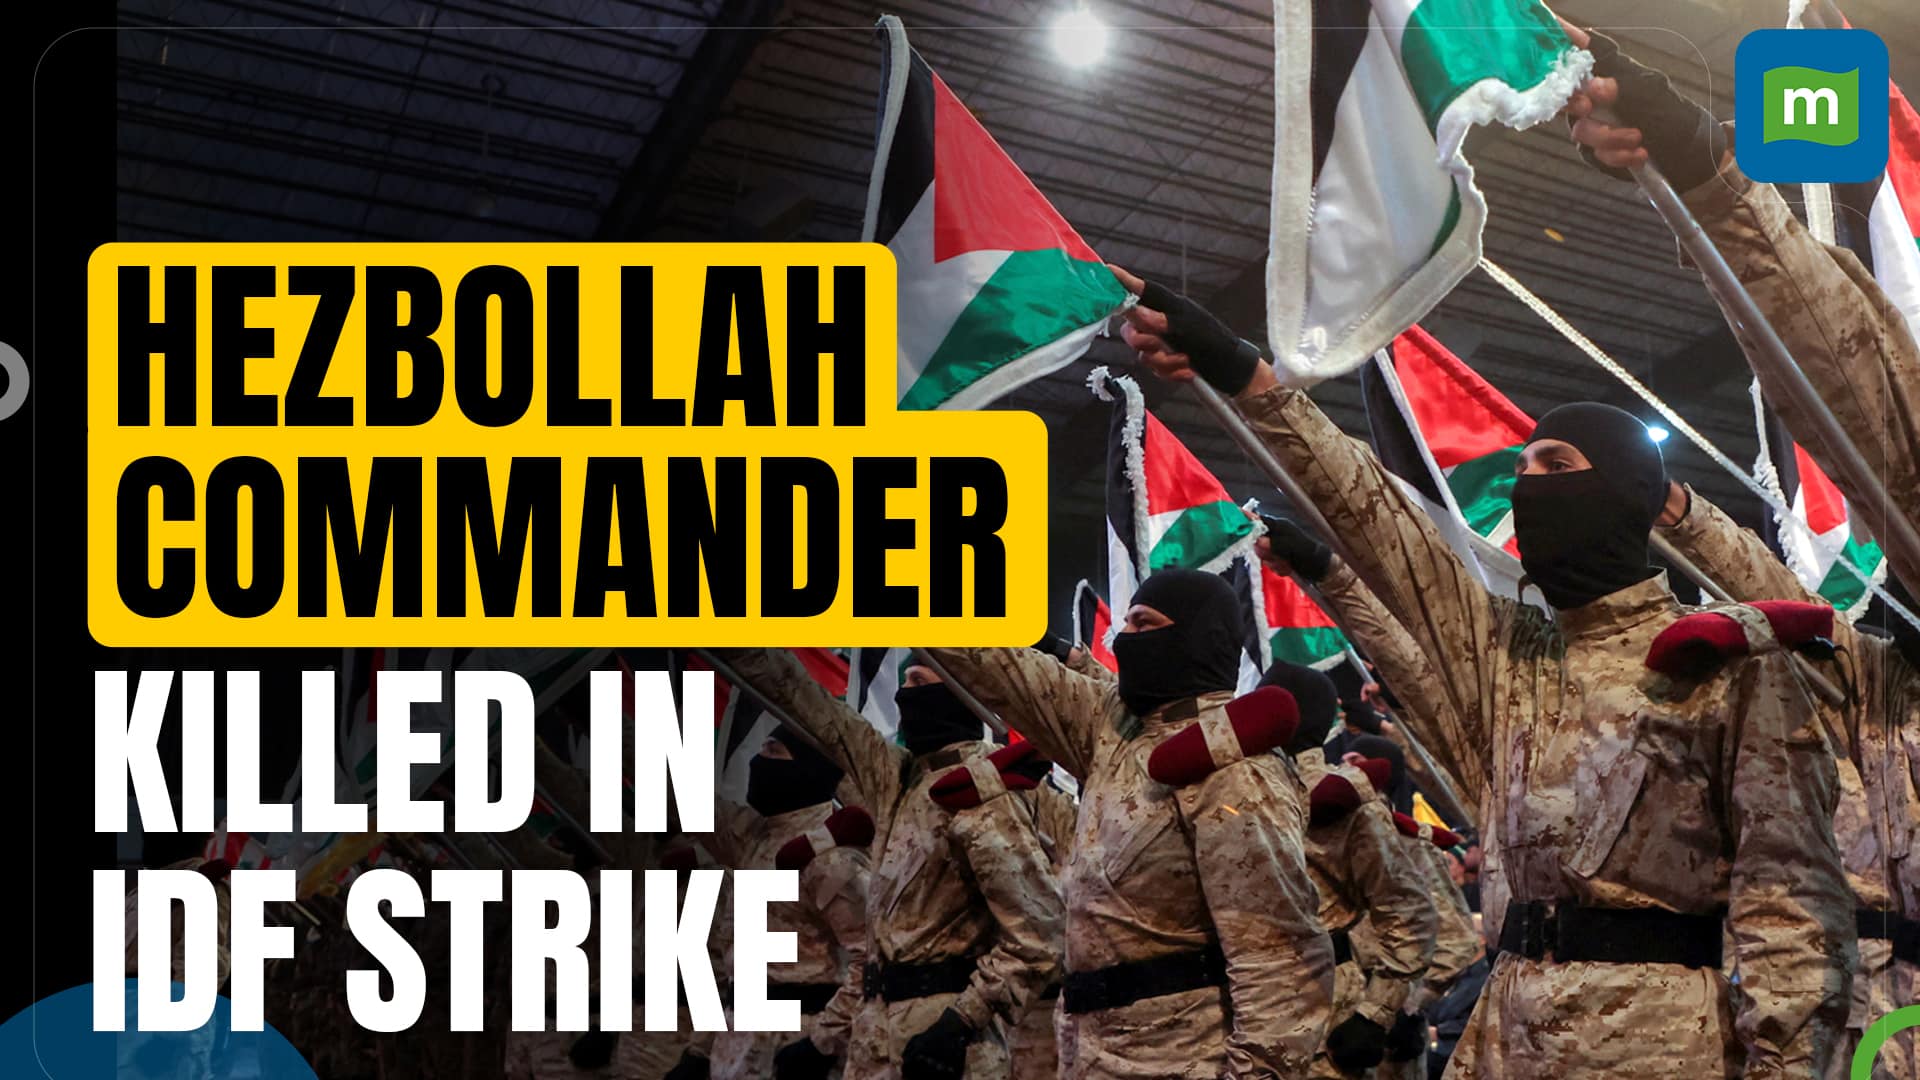 Hezbollah Commander killed in IDF strike as attack drones injure 3 in northern Israel